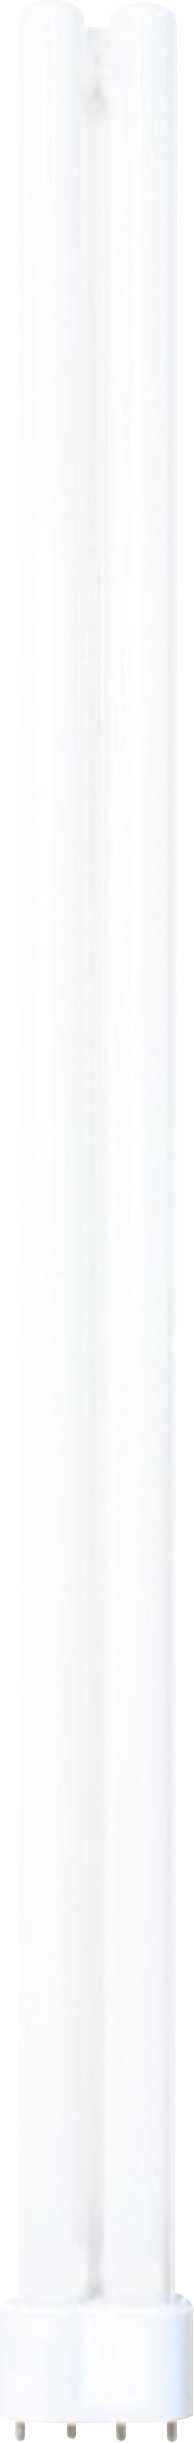 230V 55W 4PIN PL Lamp Cool White 4000K - PL55W4P 